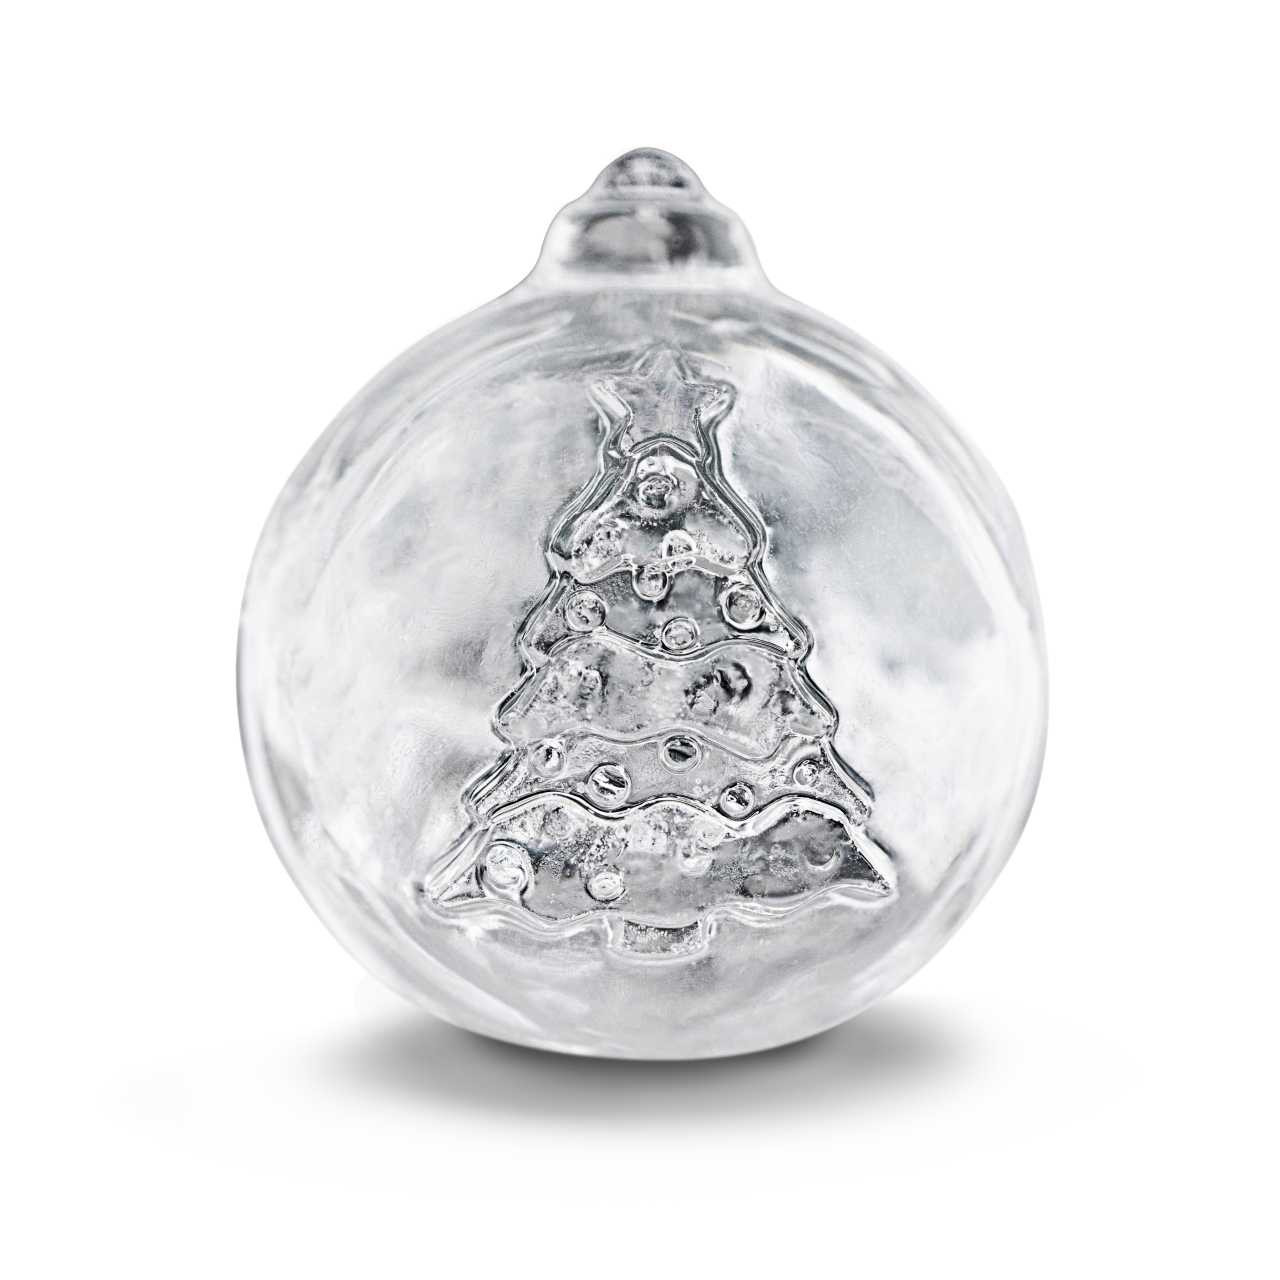 https://cdn11.bigcommerce.com/s-21kj3ntgv1/images/stencil/1280x1280/products/588/2468/Tovolo-Christmas-Tree-Ornament-Ice-Mold__63702.1652390372.jpg?c=2